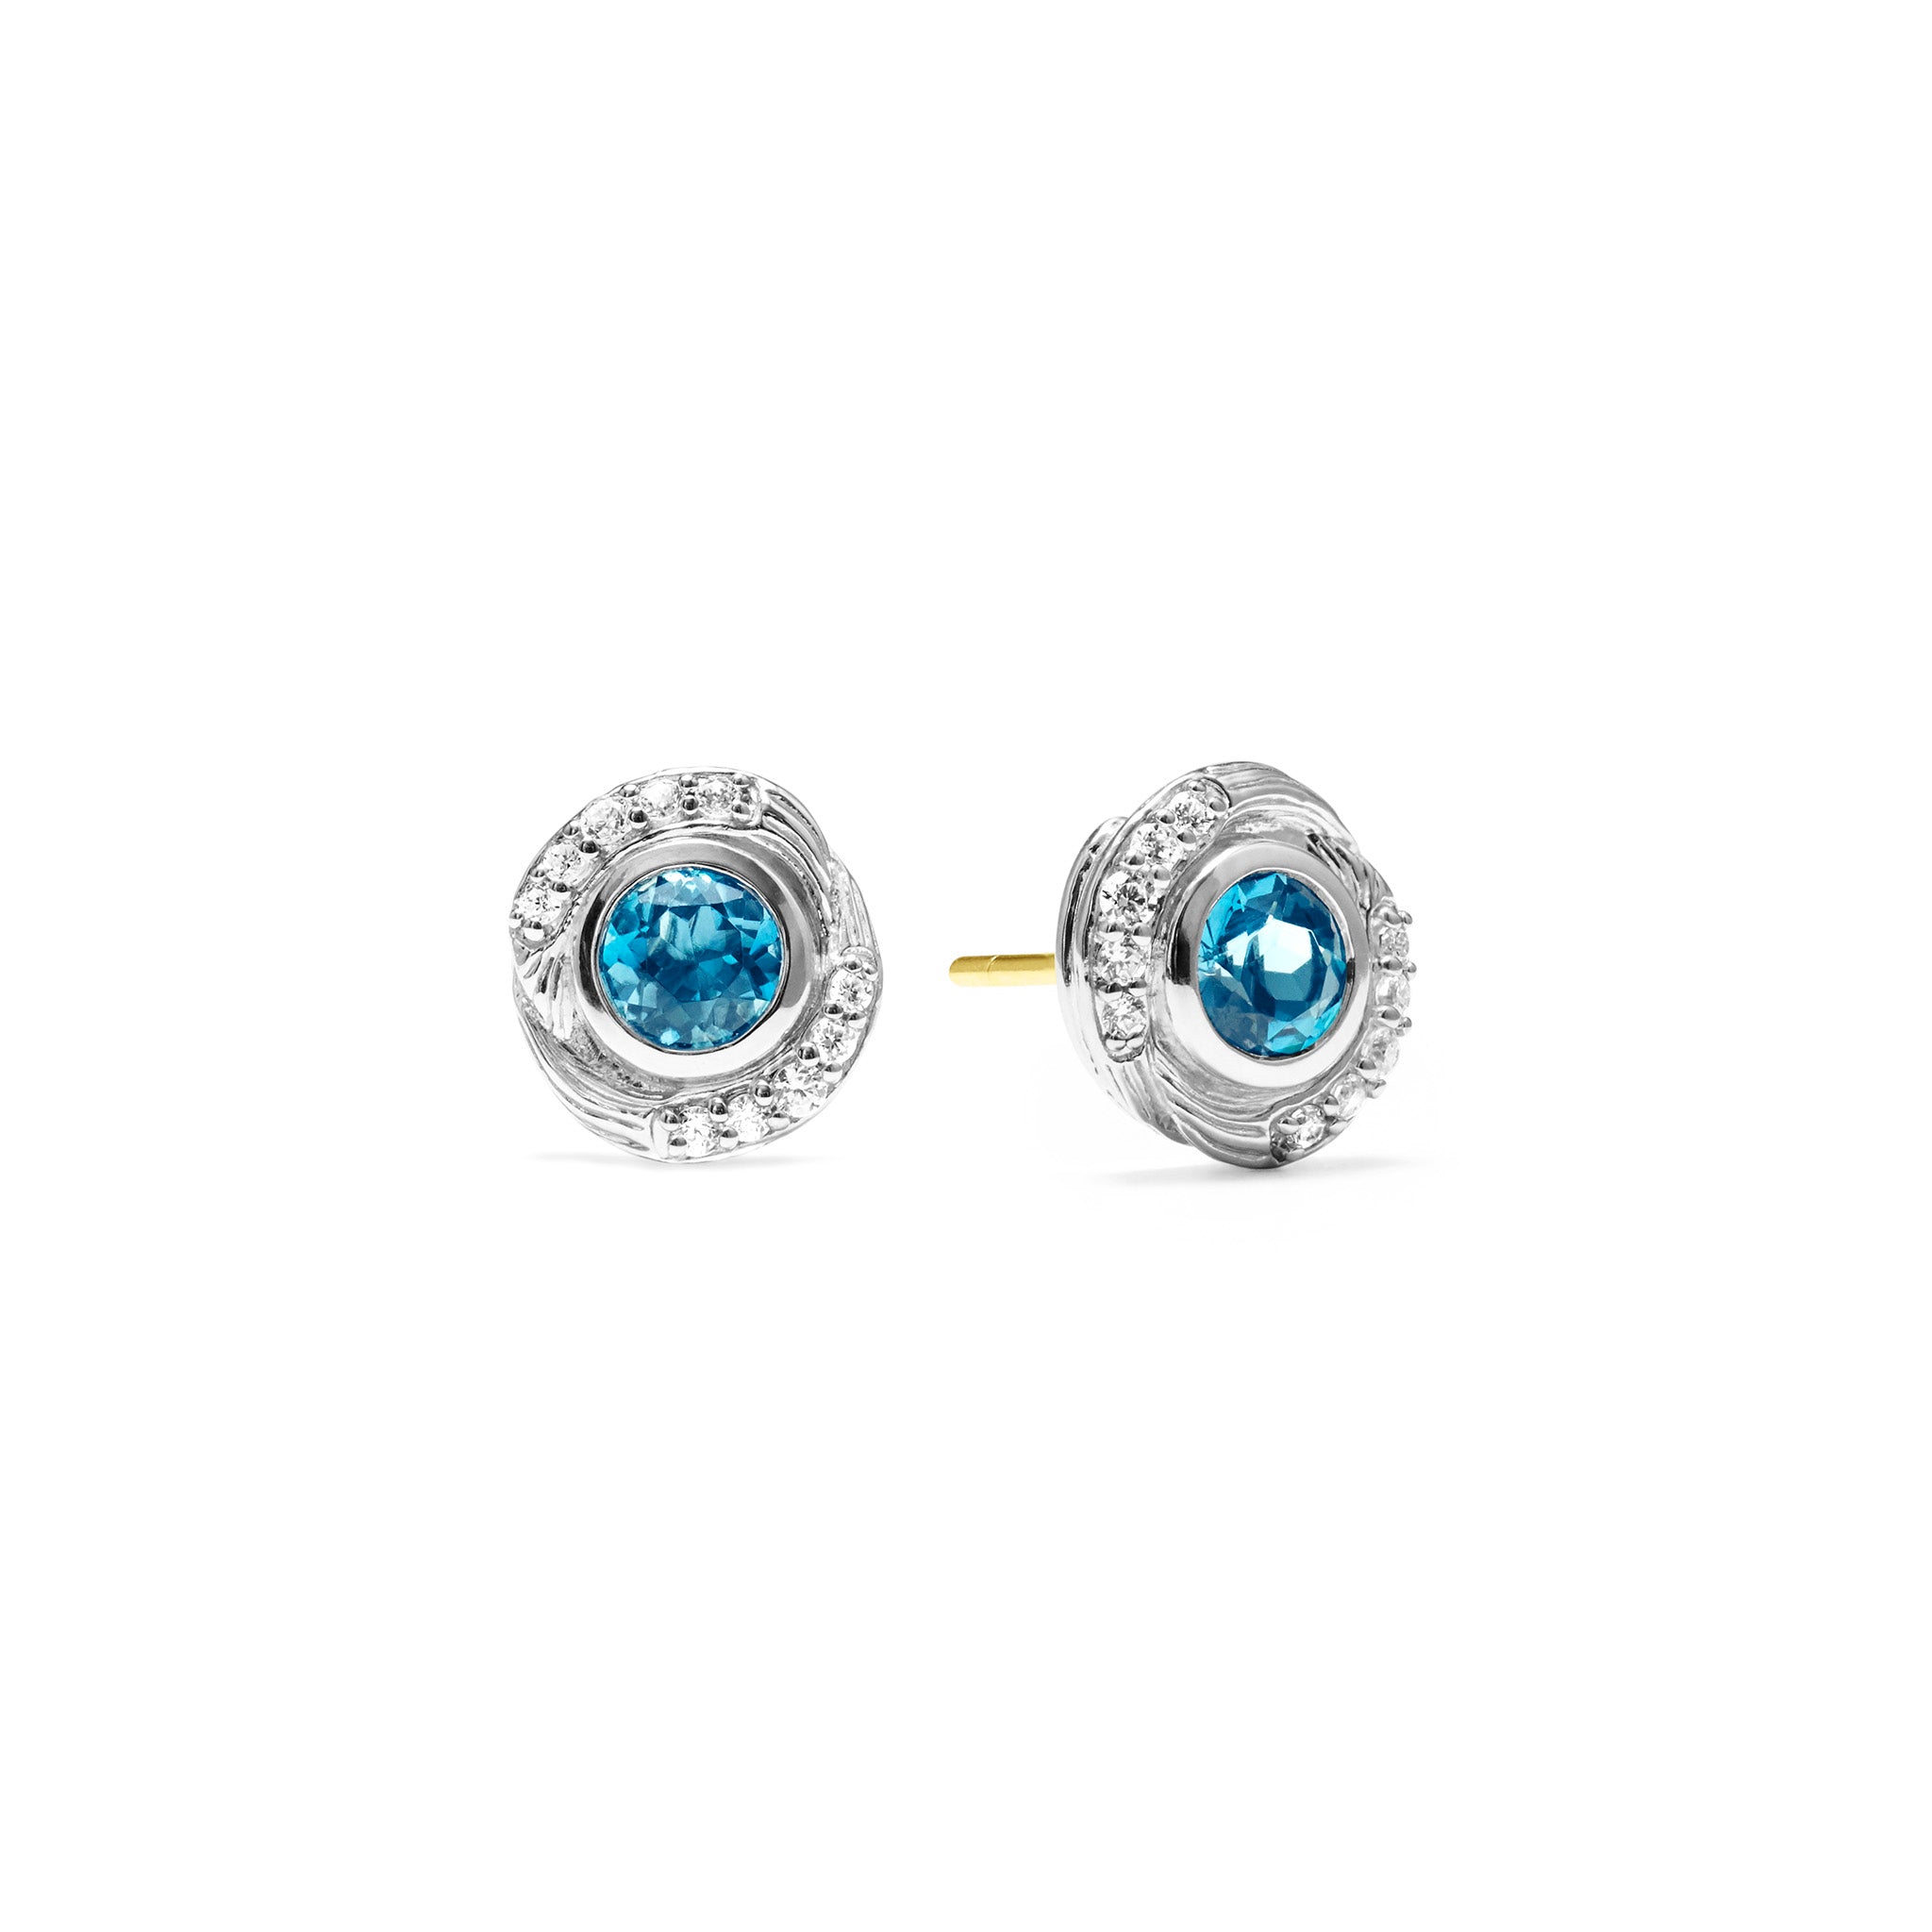 Santorini Stud Earrings with London Blue Topaz and Diamonds